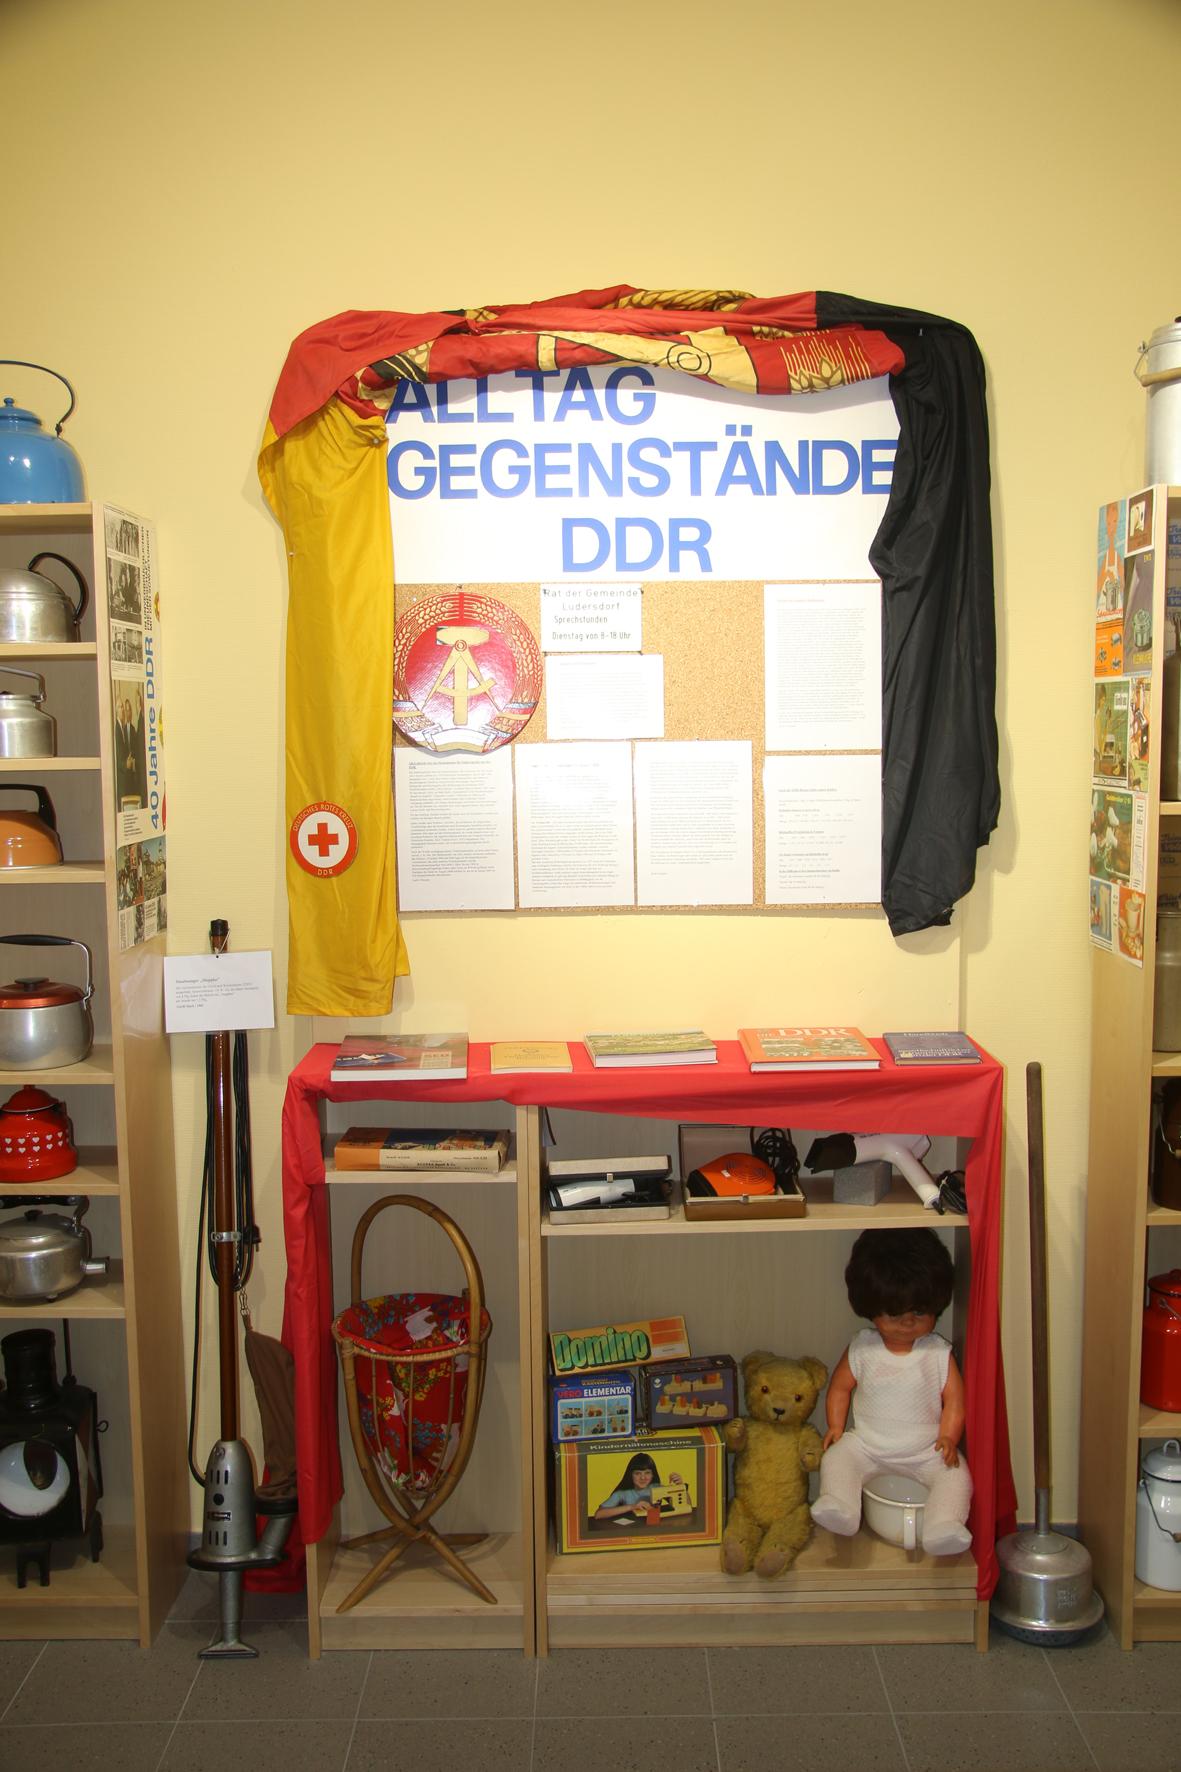 DDR-Alltagsgegenstände: DDR-Fahne, Puppe,  Gesellschaftsspiele